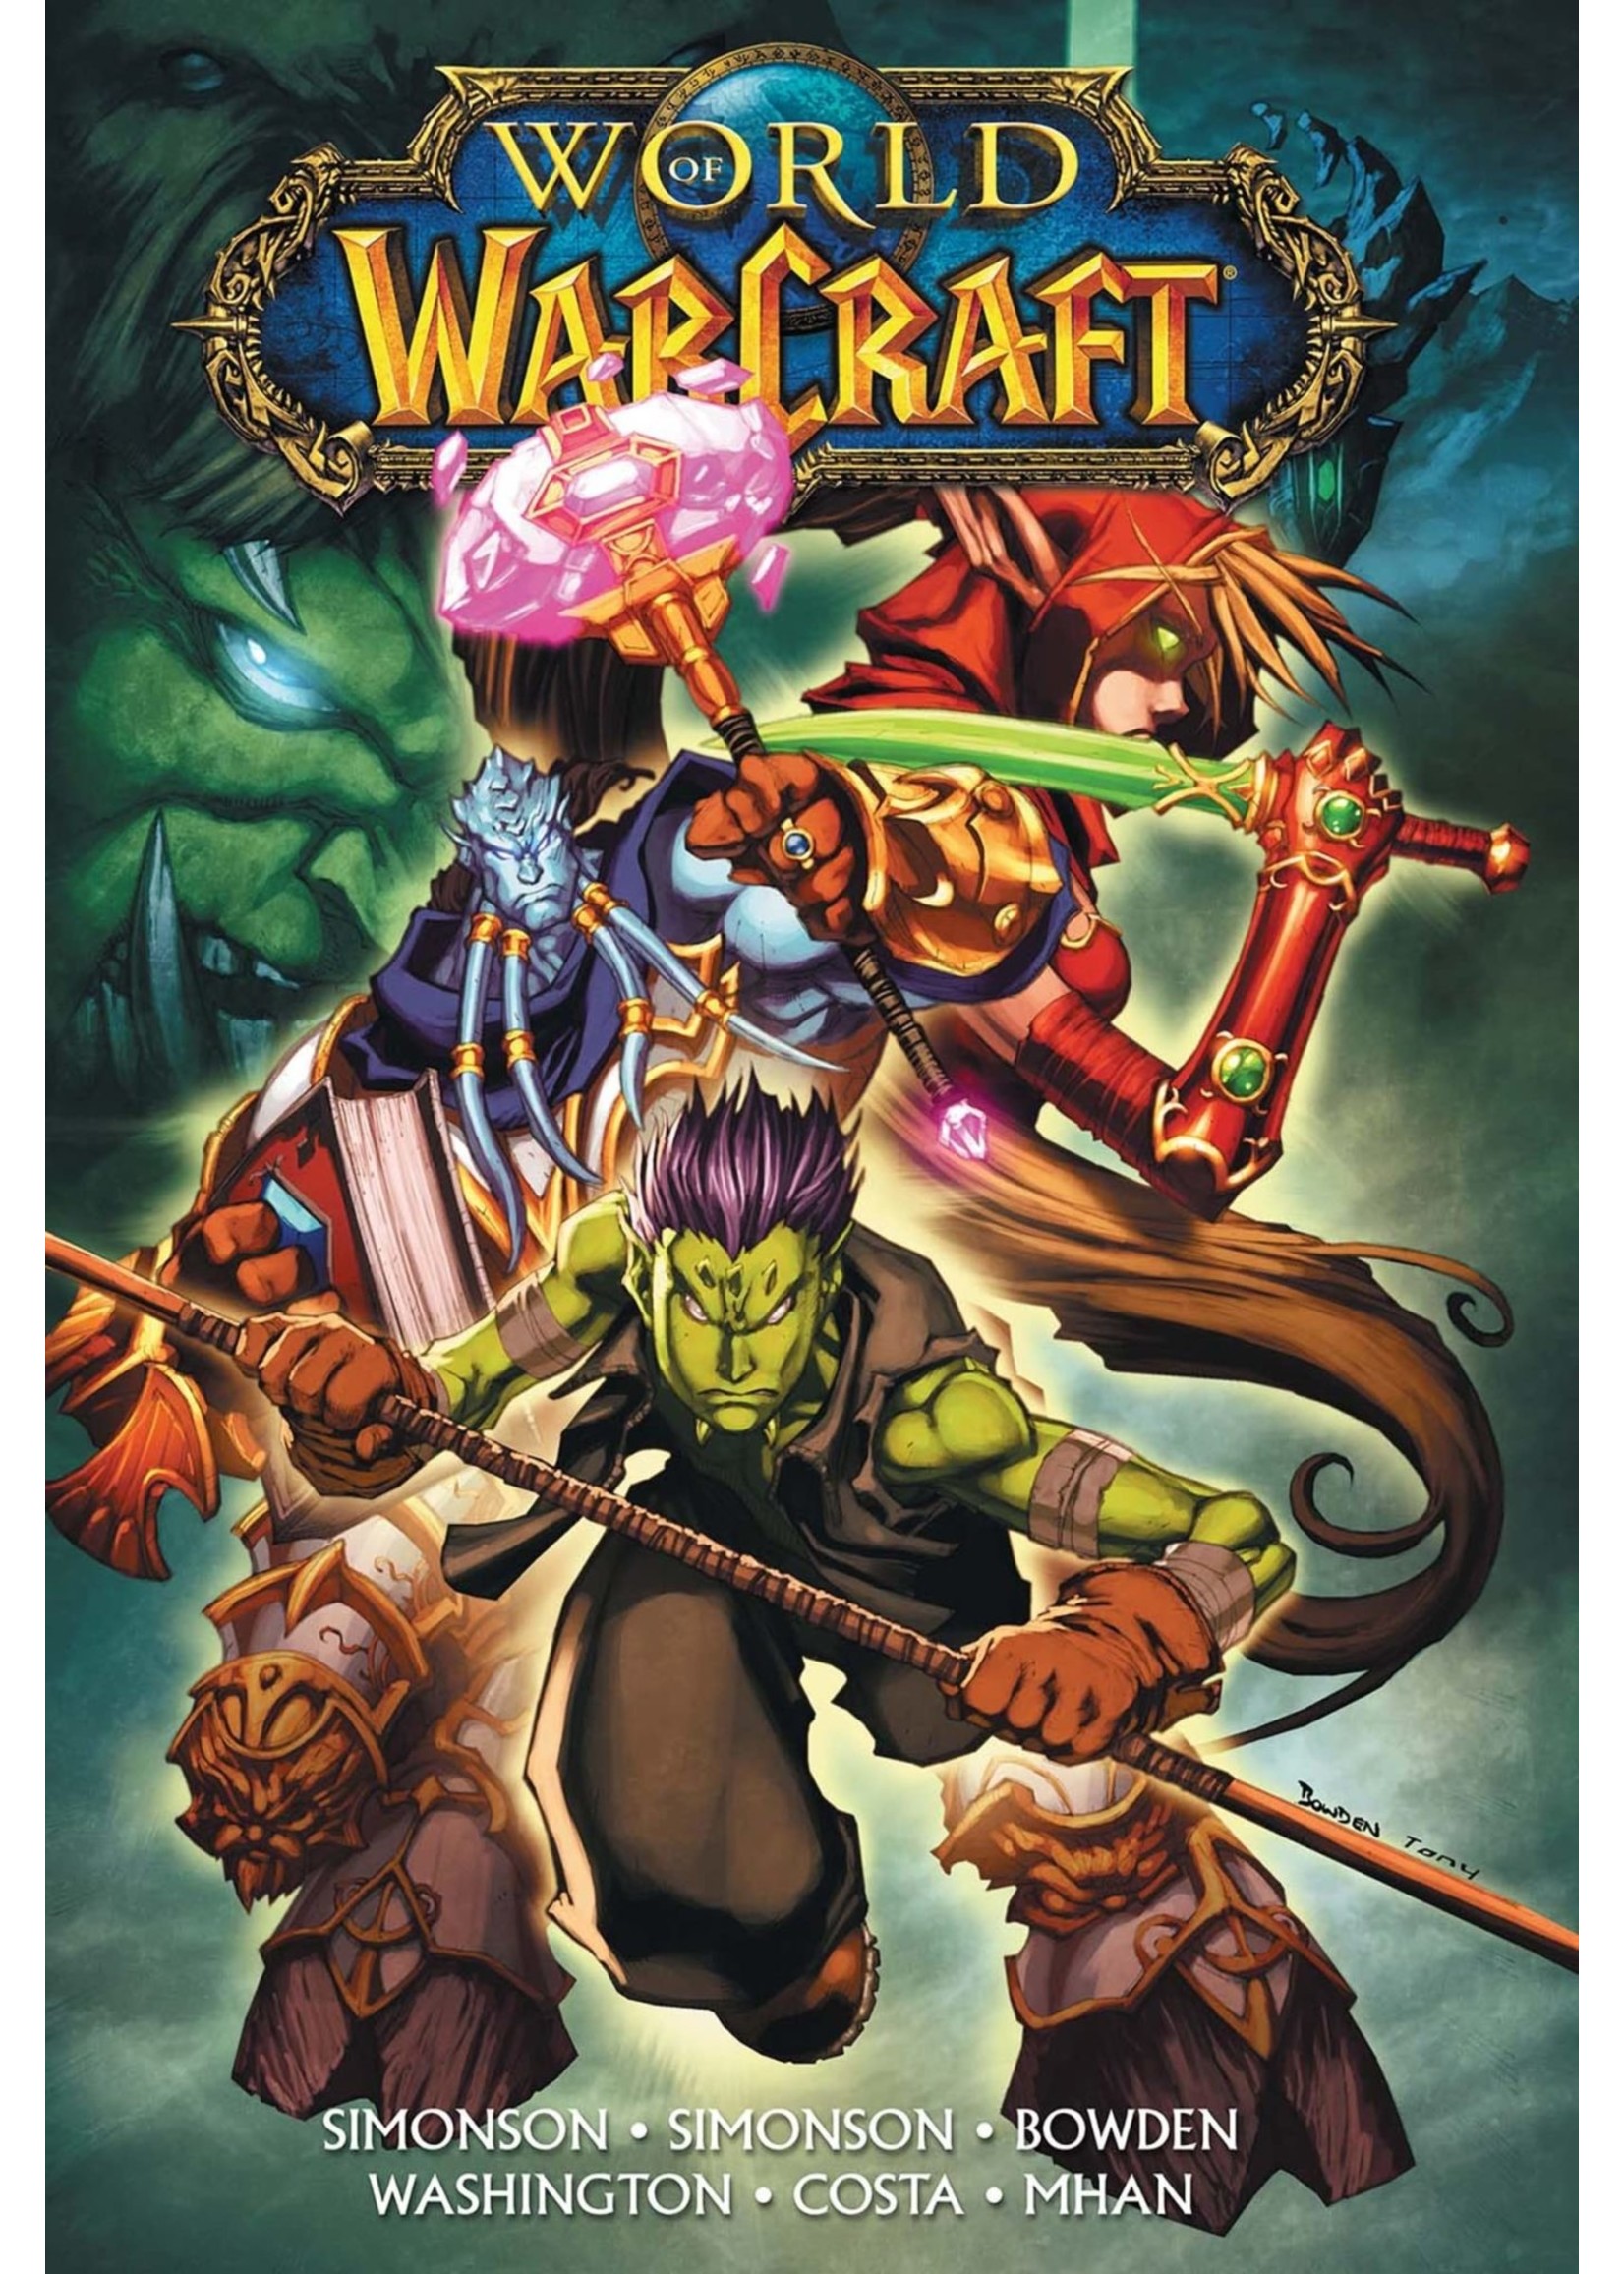 DC COMICS WORLD OF WARCRAFT BOOK 4